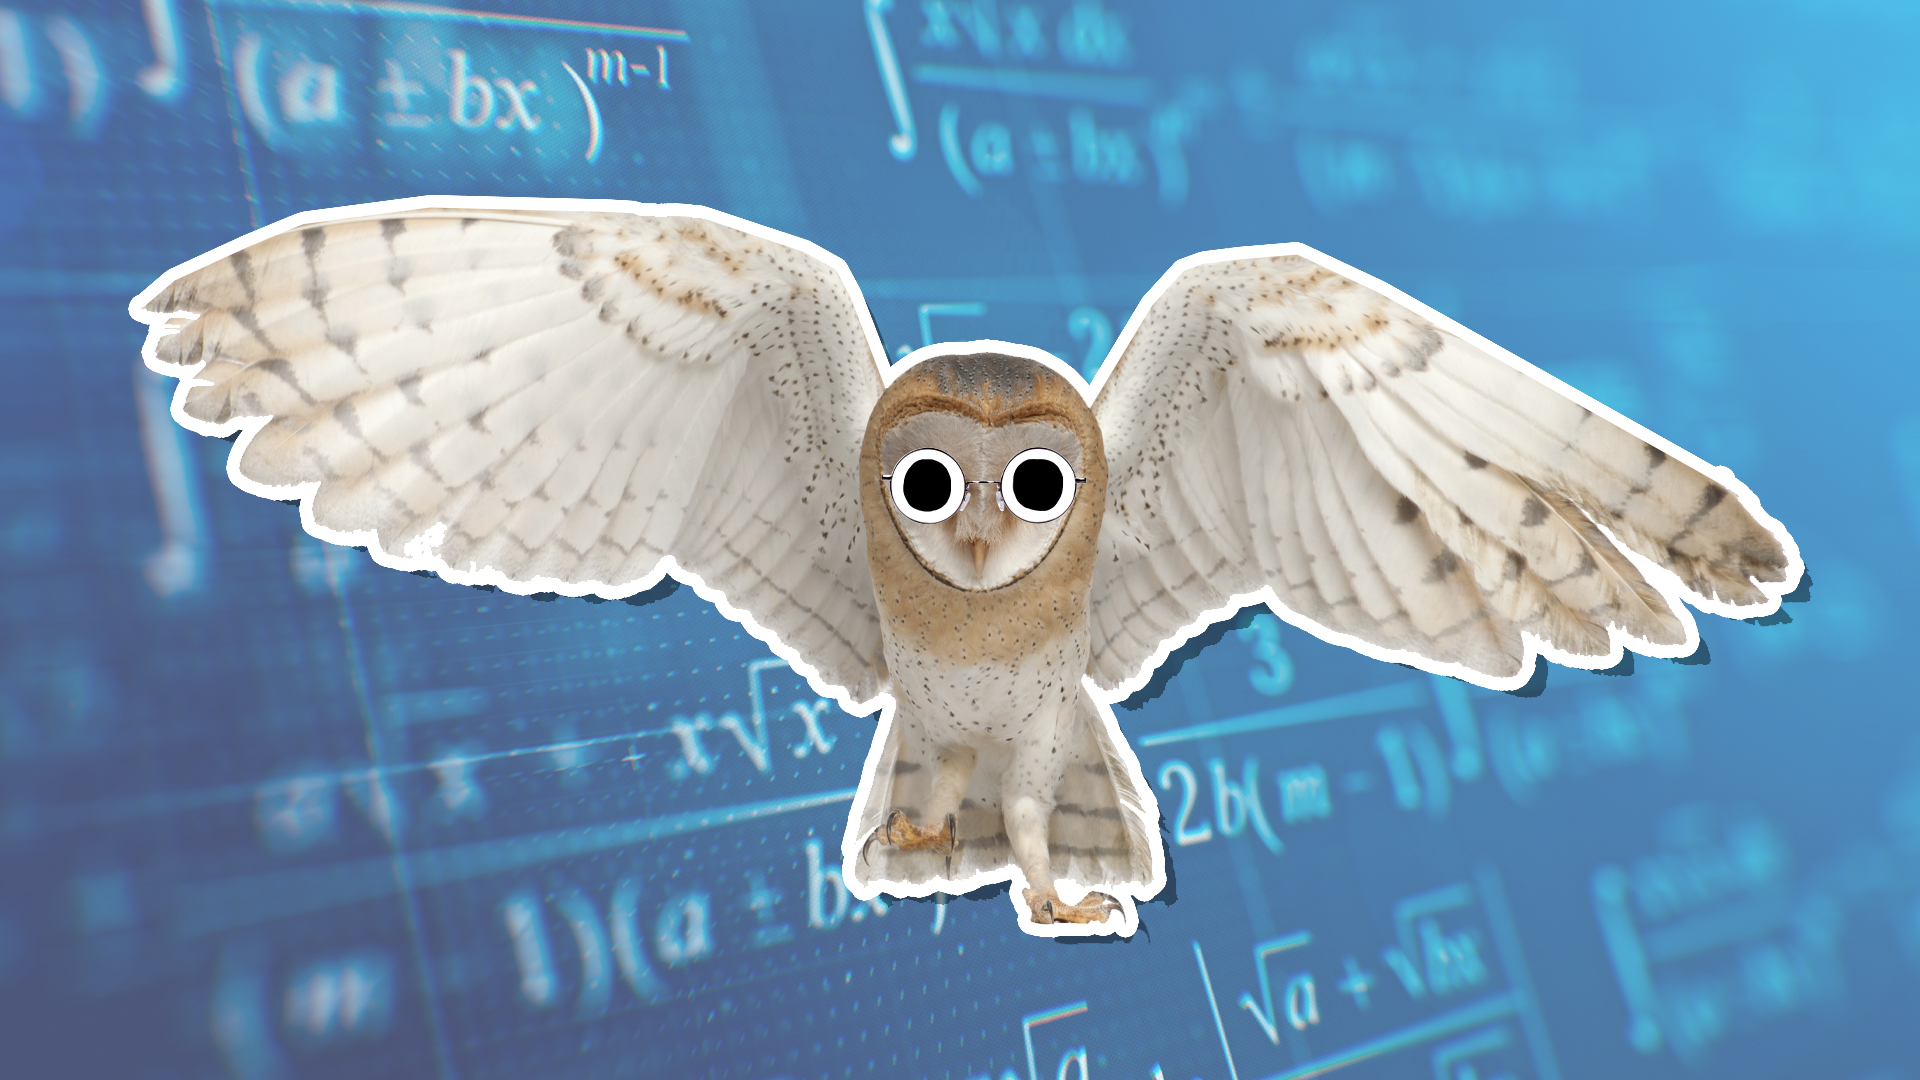 Algebra owl